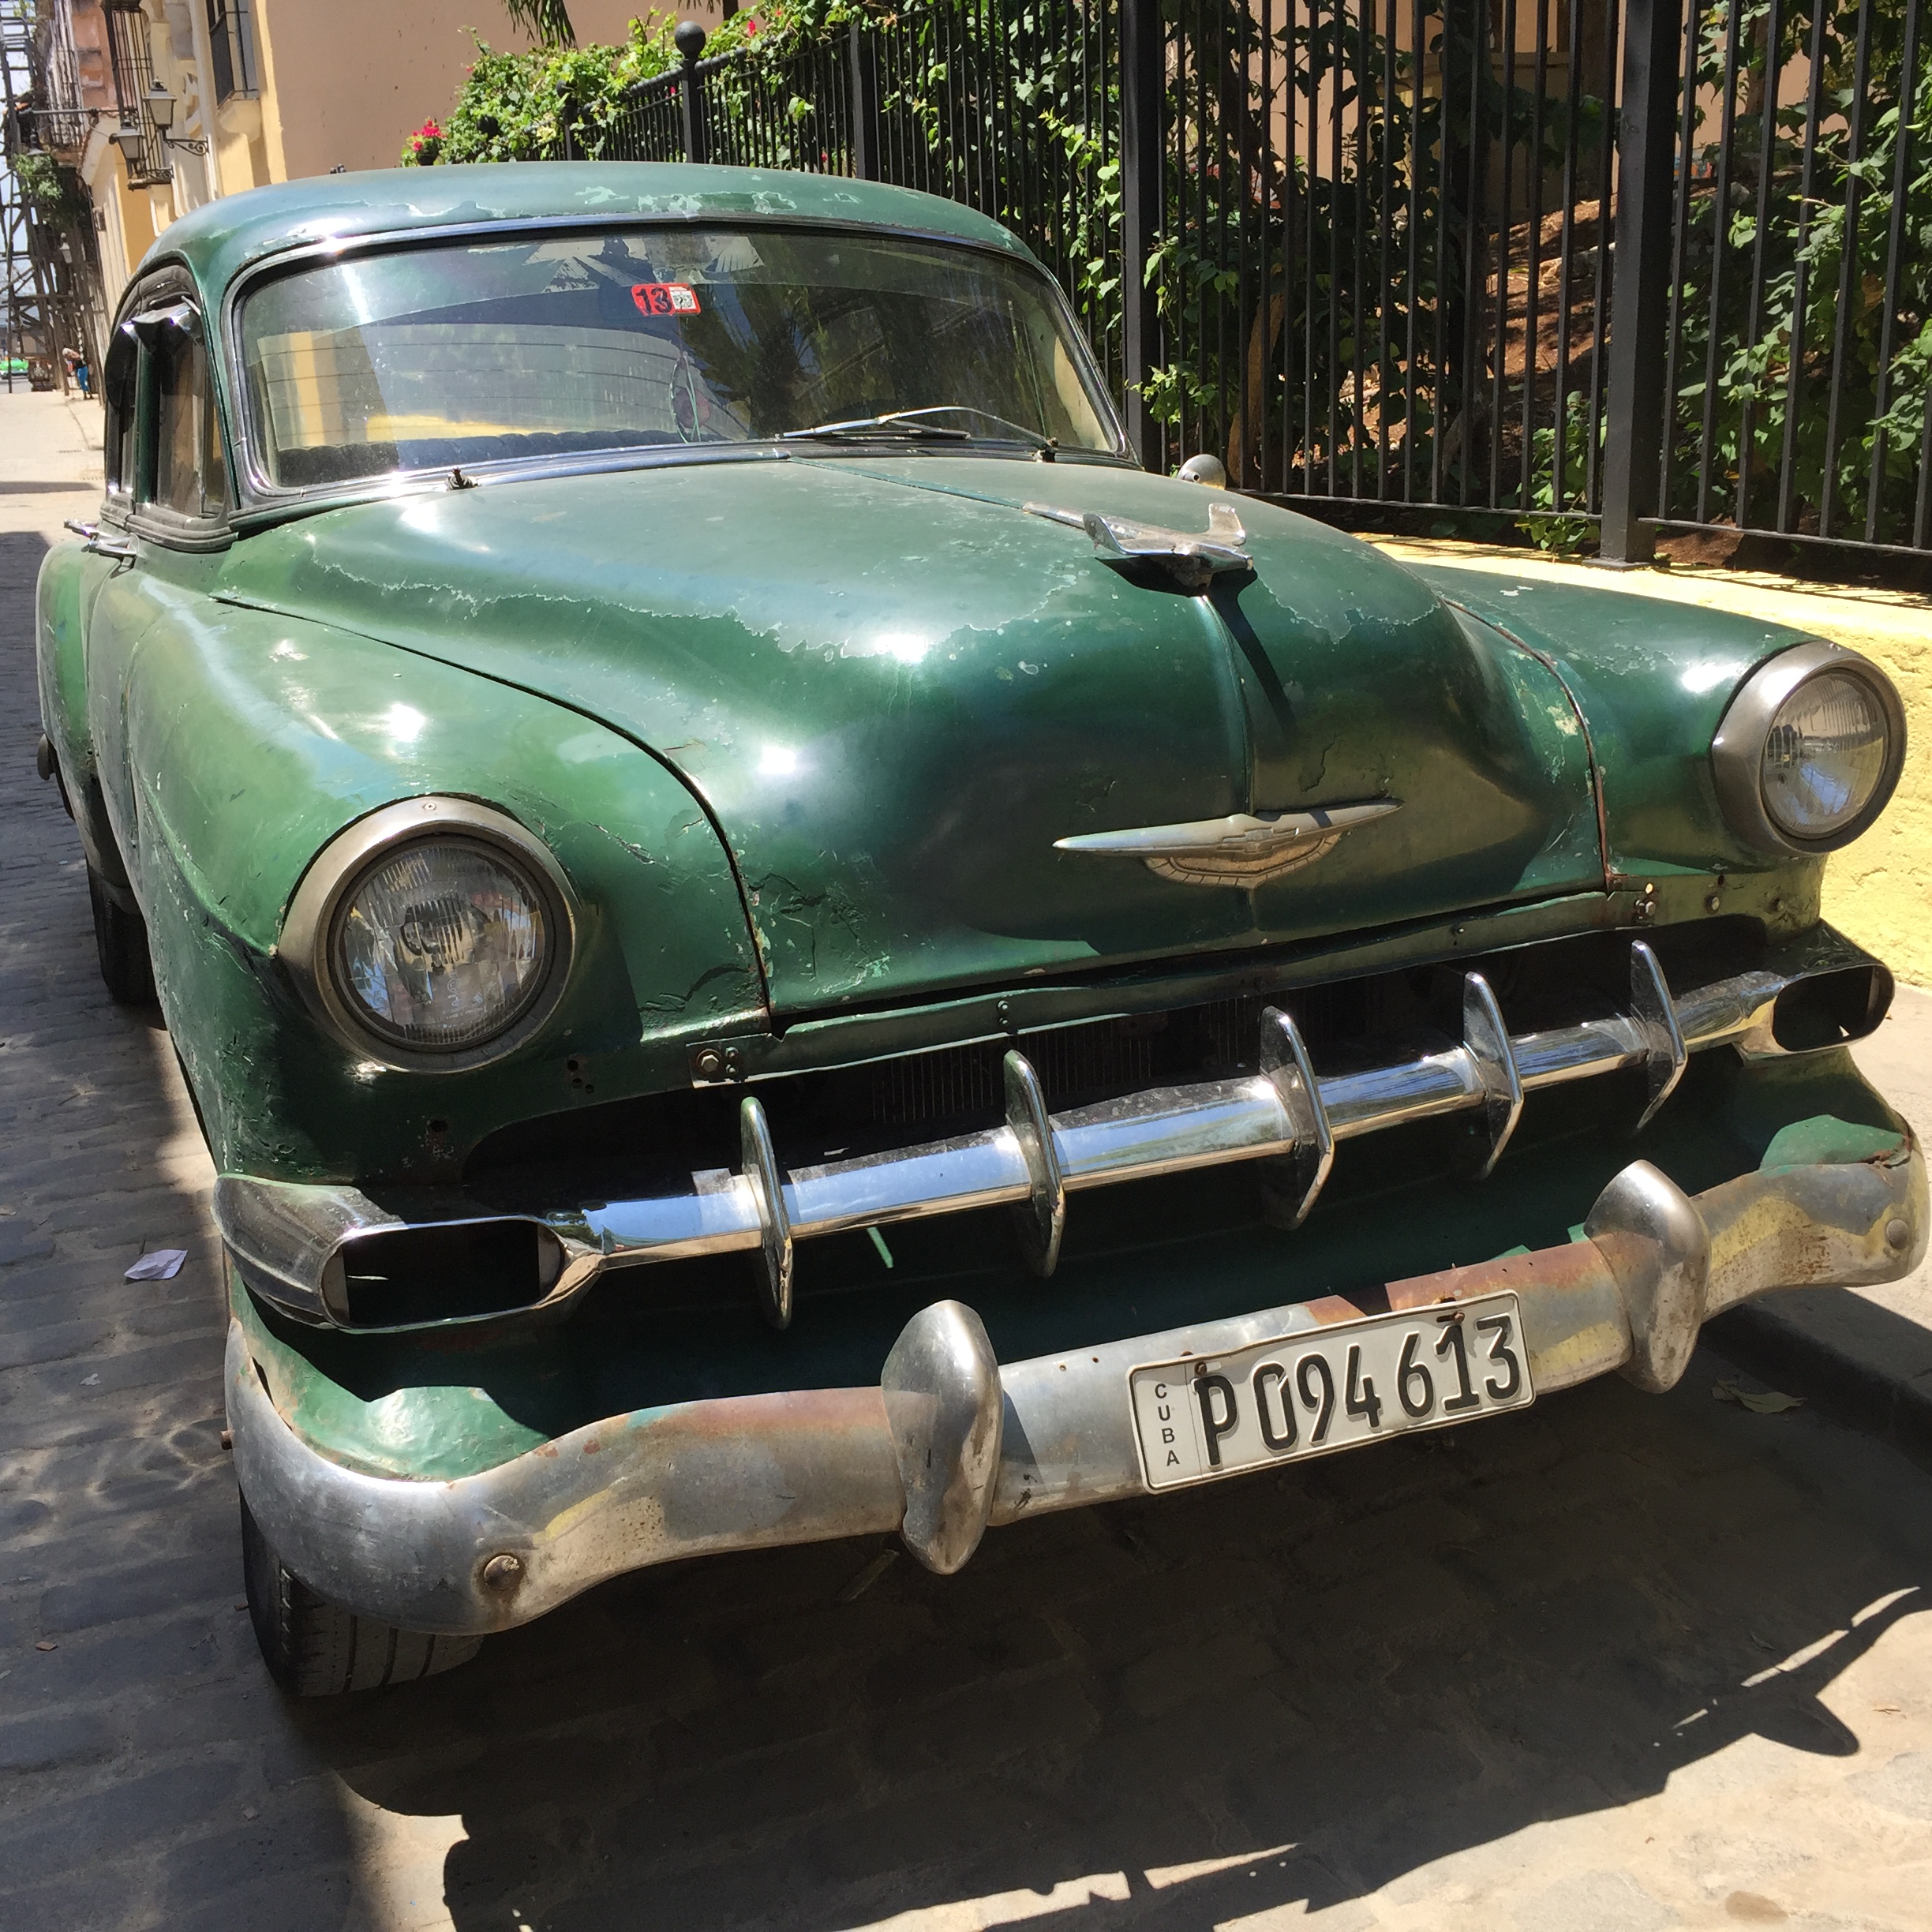 A classic Cuban car in Havana, Cuba. (photo credit: Gavin Lichtenstein)